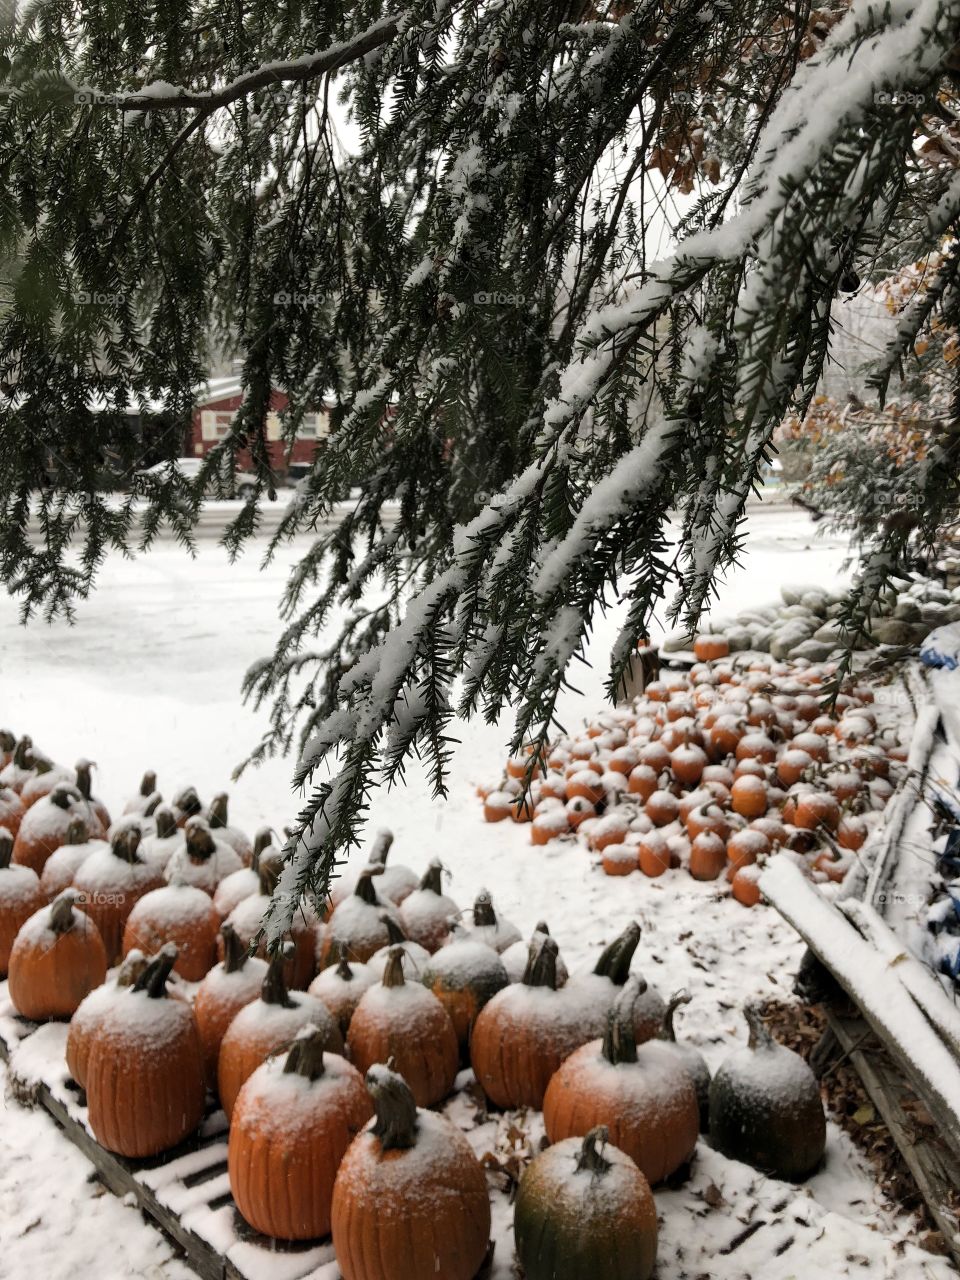 Pumpkins and snow